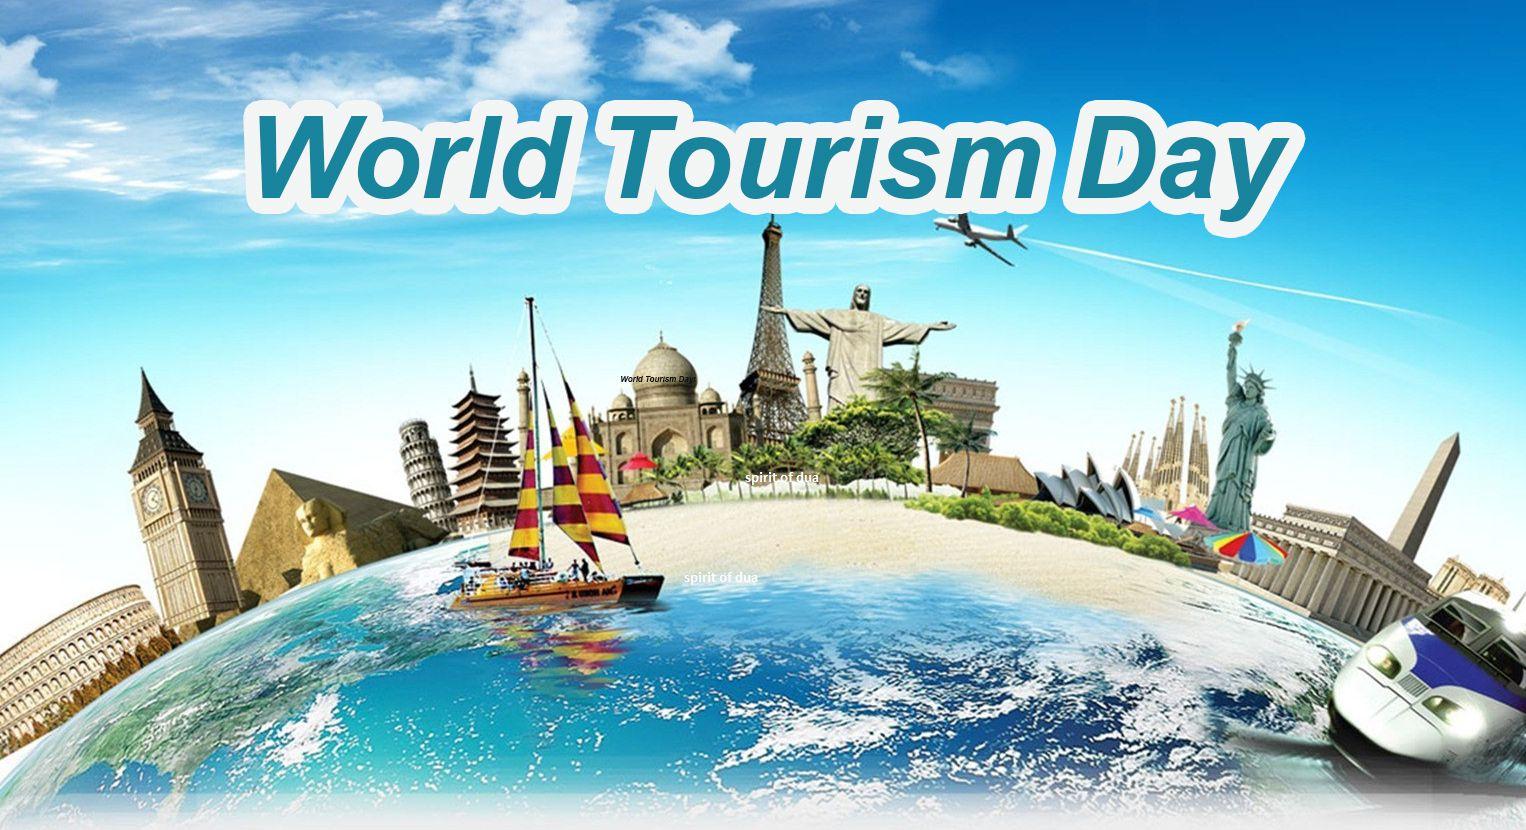 World Tourism Day Wallpaper HD. Tourism day, Travel